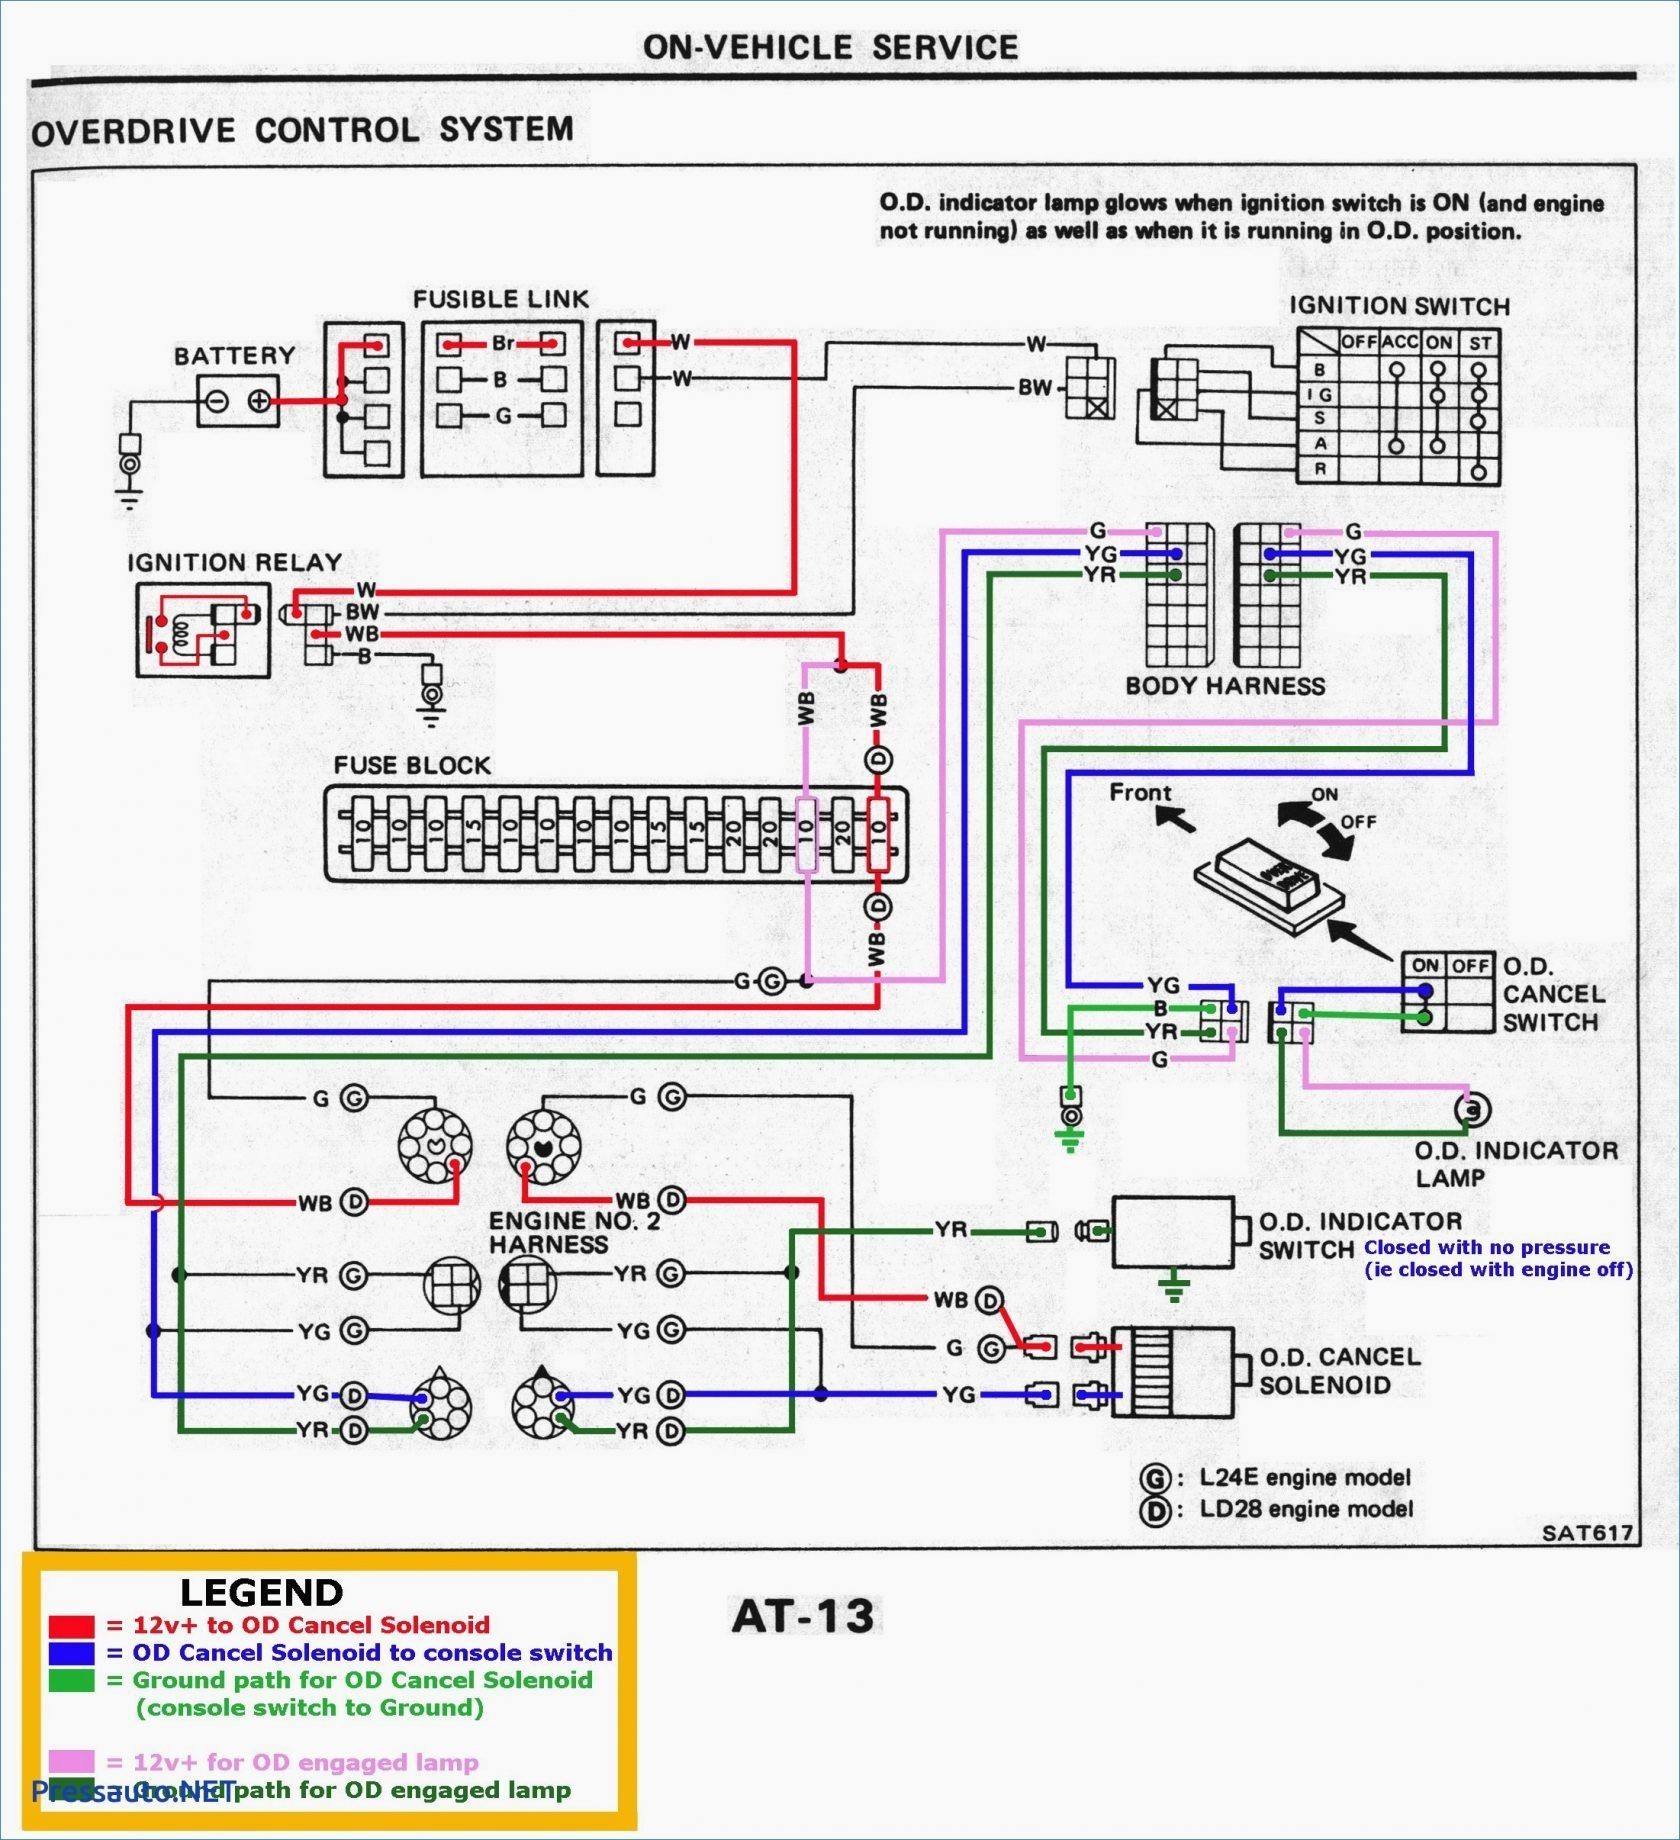 2000 ford F150 Parts Diagram 2011 ford F150 Radio Wiring Diagram Wiring Diagram toolbox Of 2000 ford F150 Parts Diagram